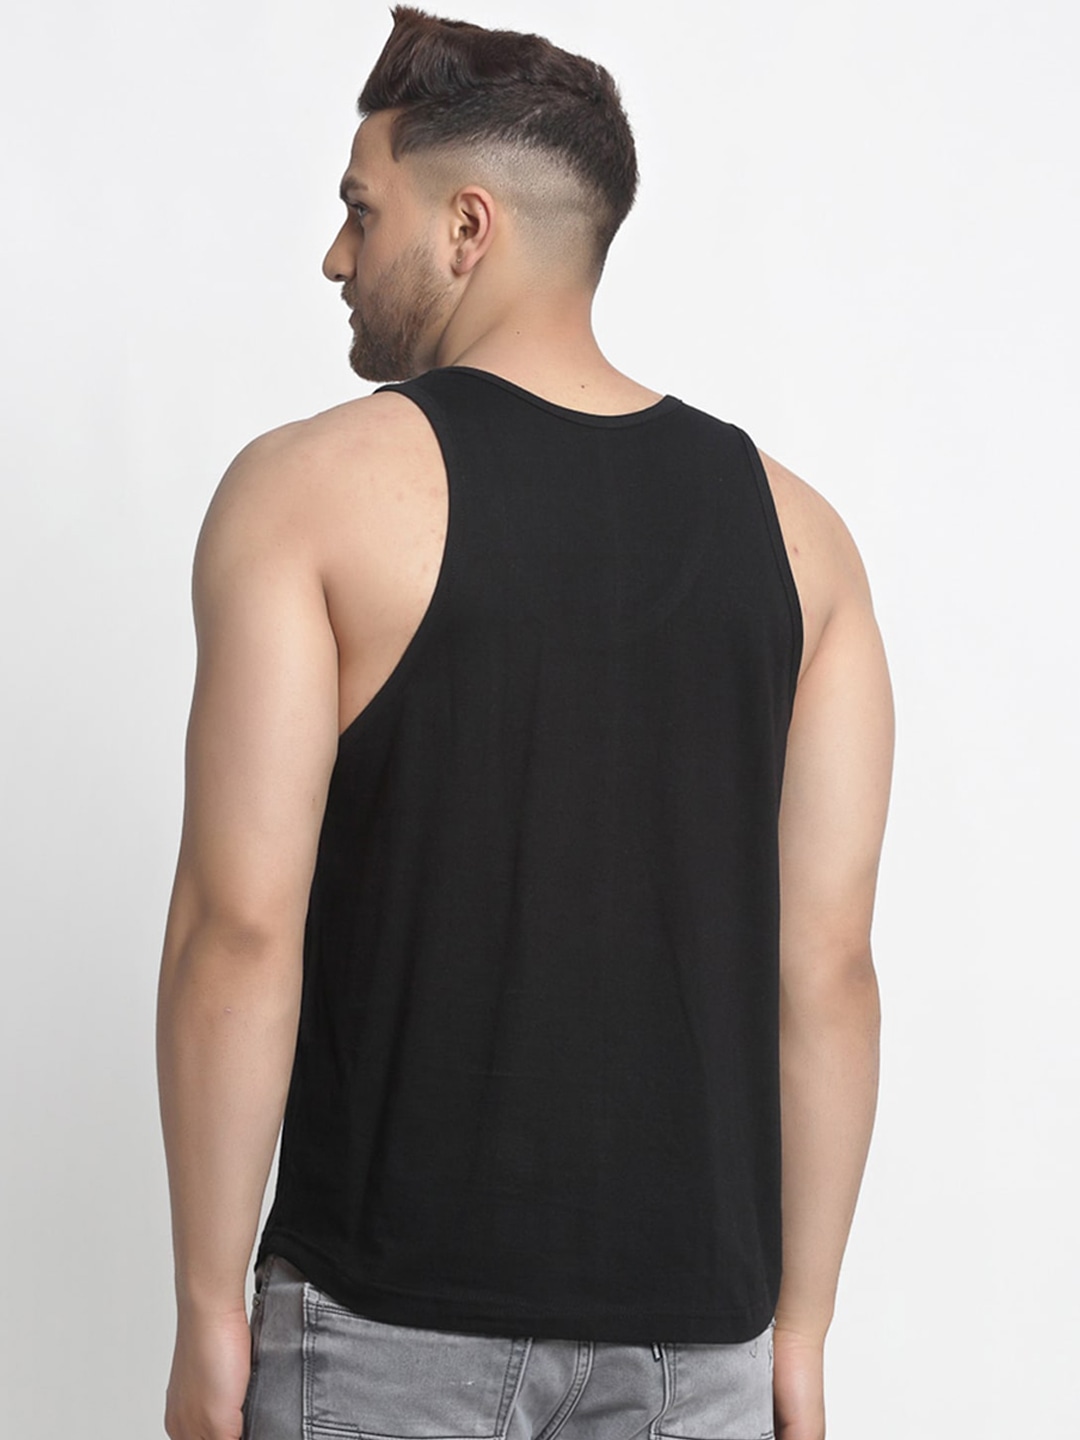 Clothing Innerwear Vests | Friskers Men Black & White Printed Cotton Apple Cut Gym Vest - VR98938